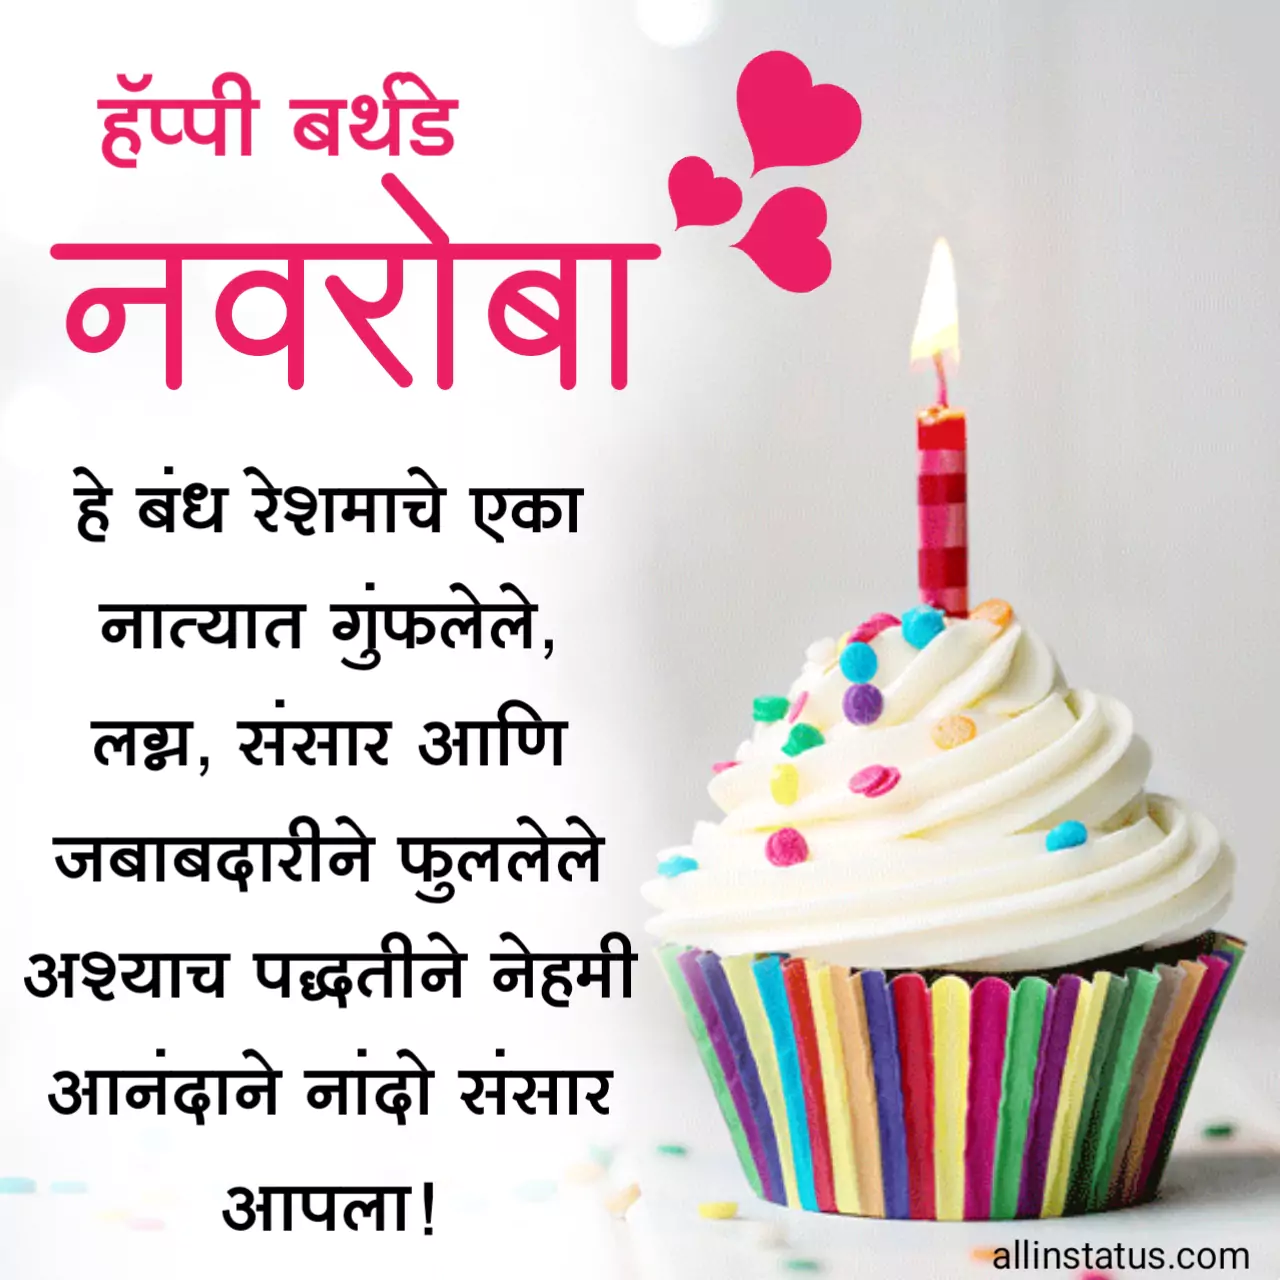 Happy Birthday Image for husband in marathi